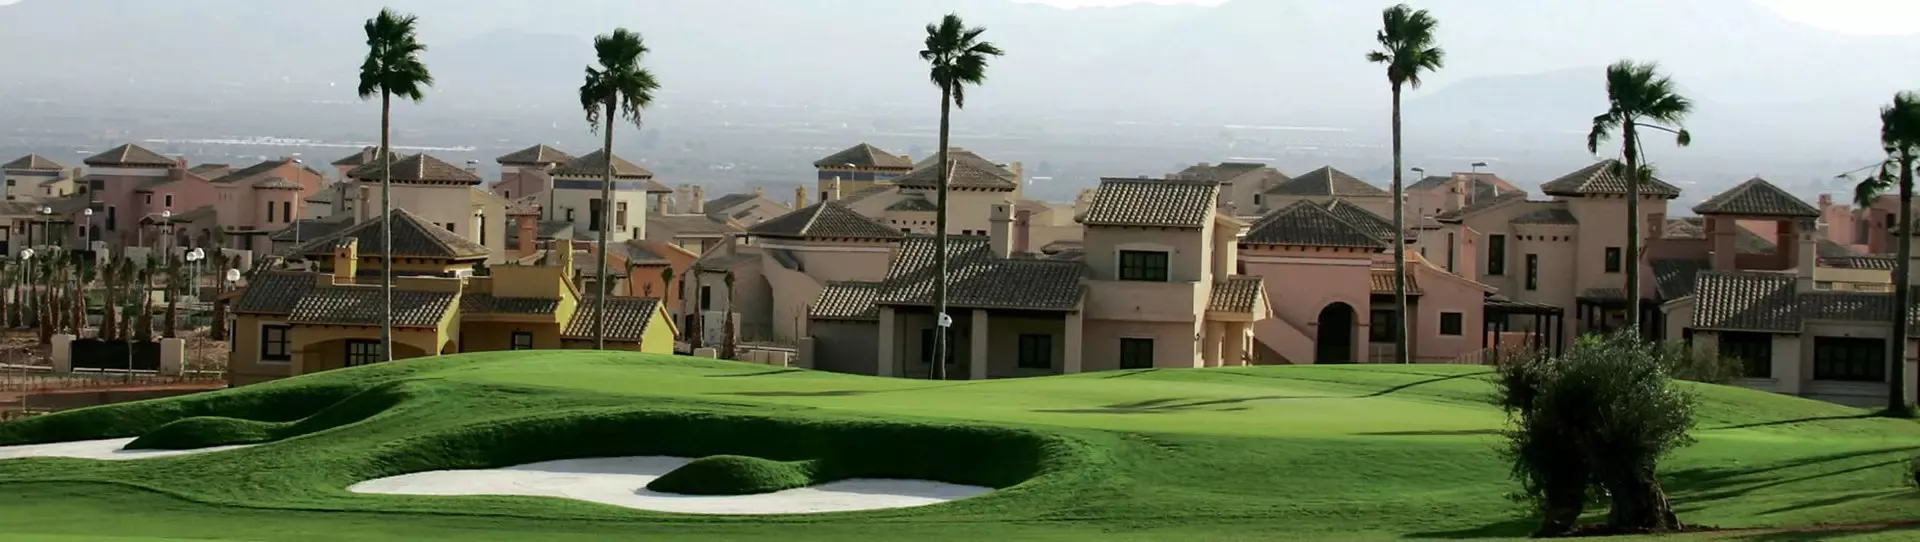 Spain golf courses - Hacienda del Alamo Golf Resort - Photo 2